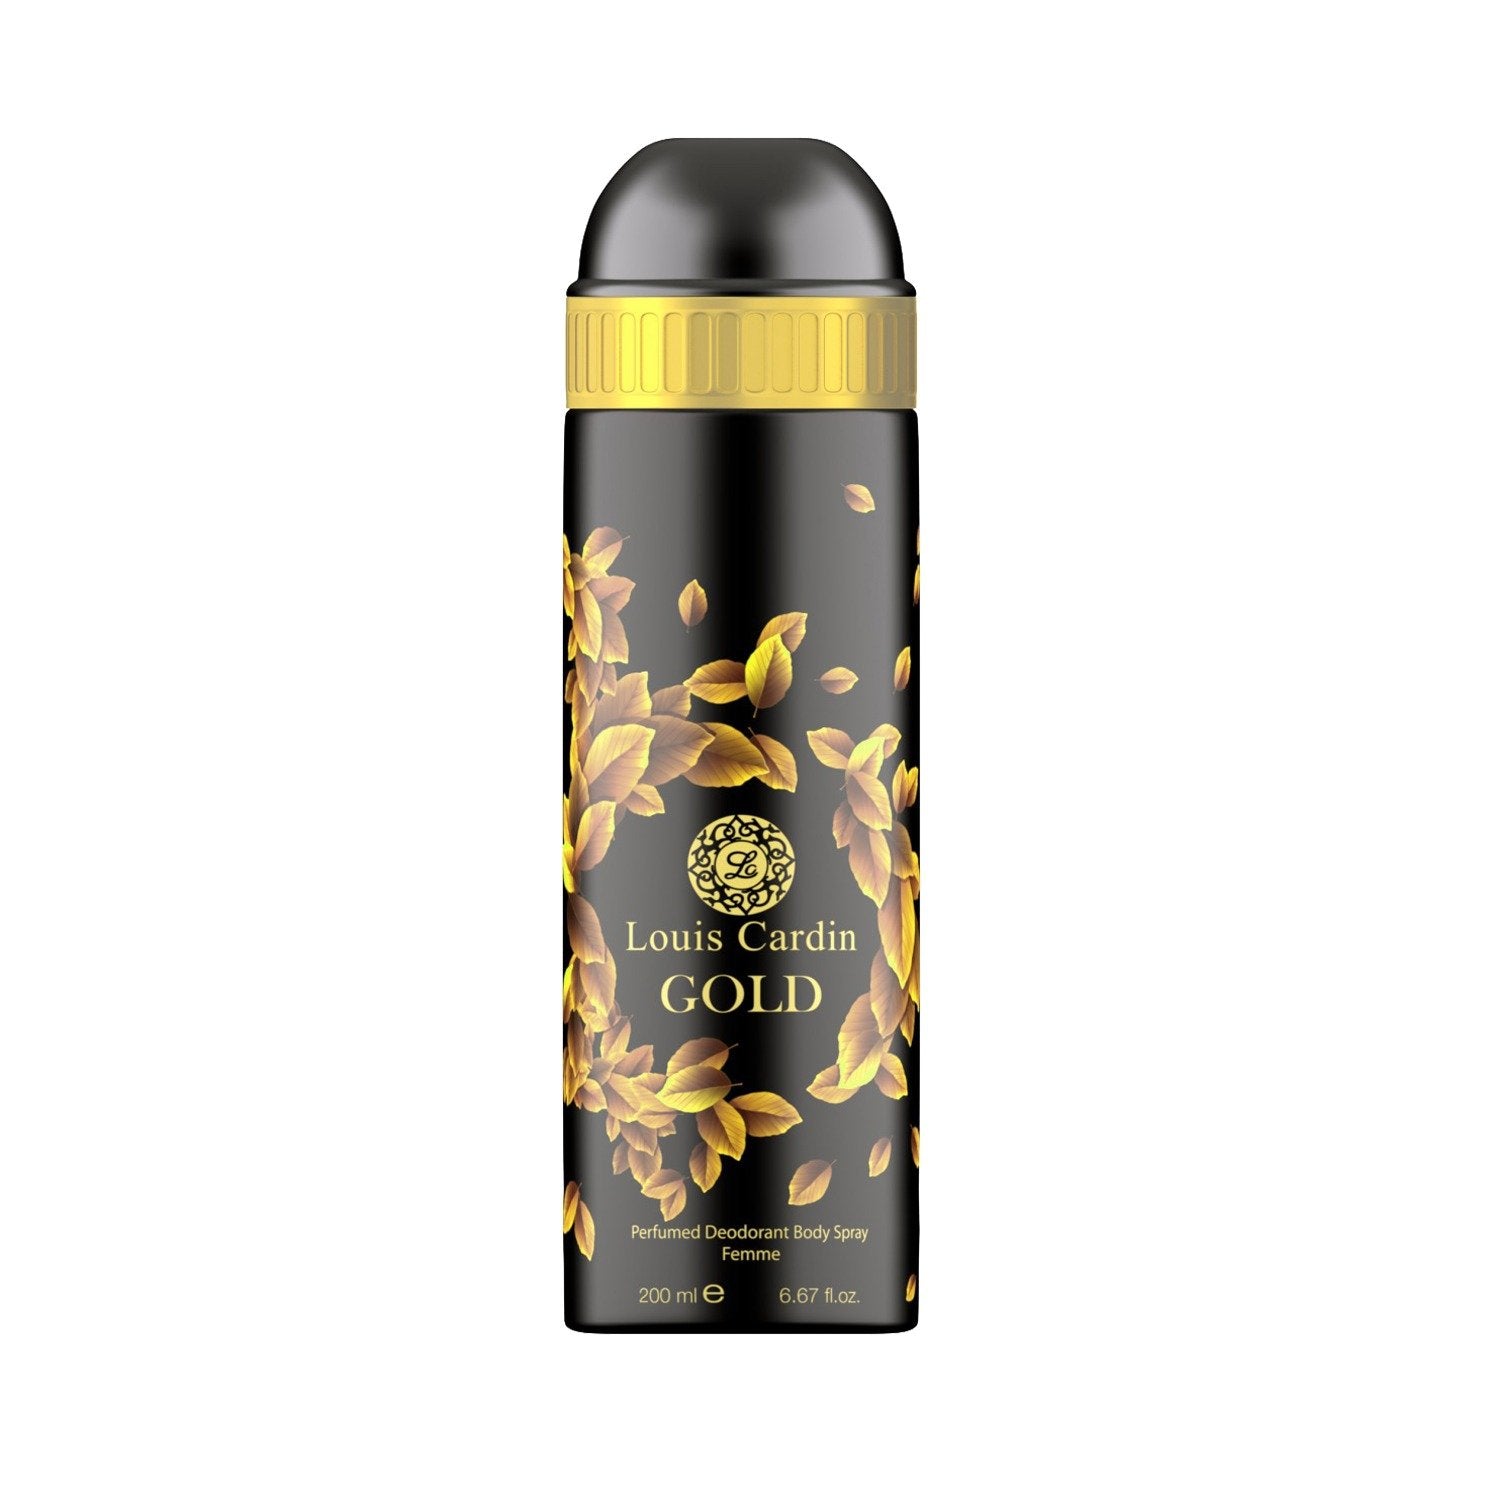 louis cardin gold body spray for men and women